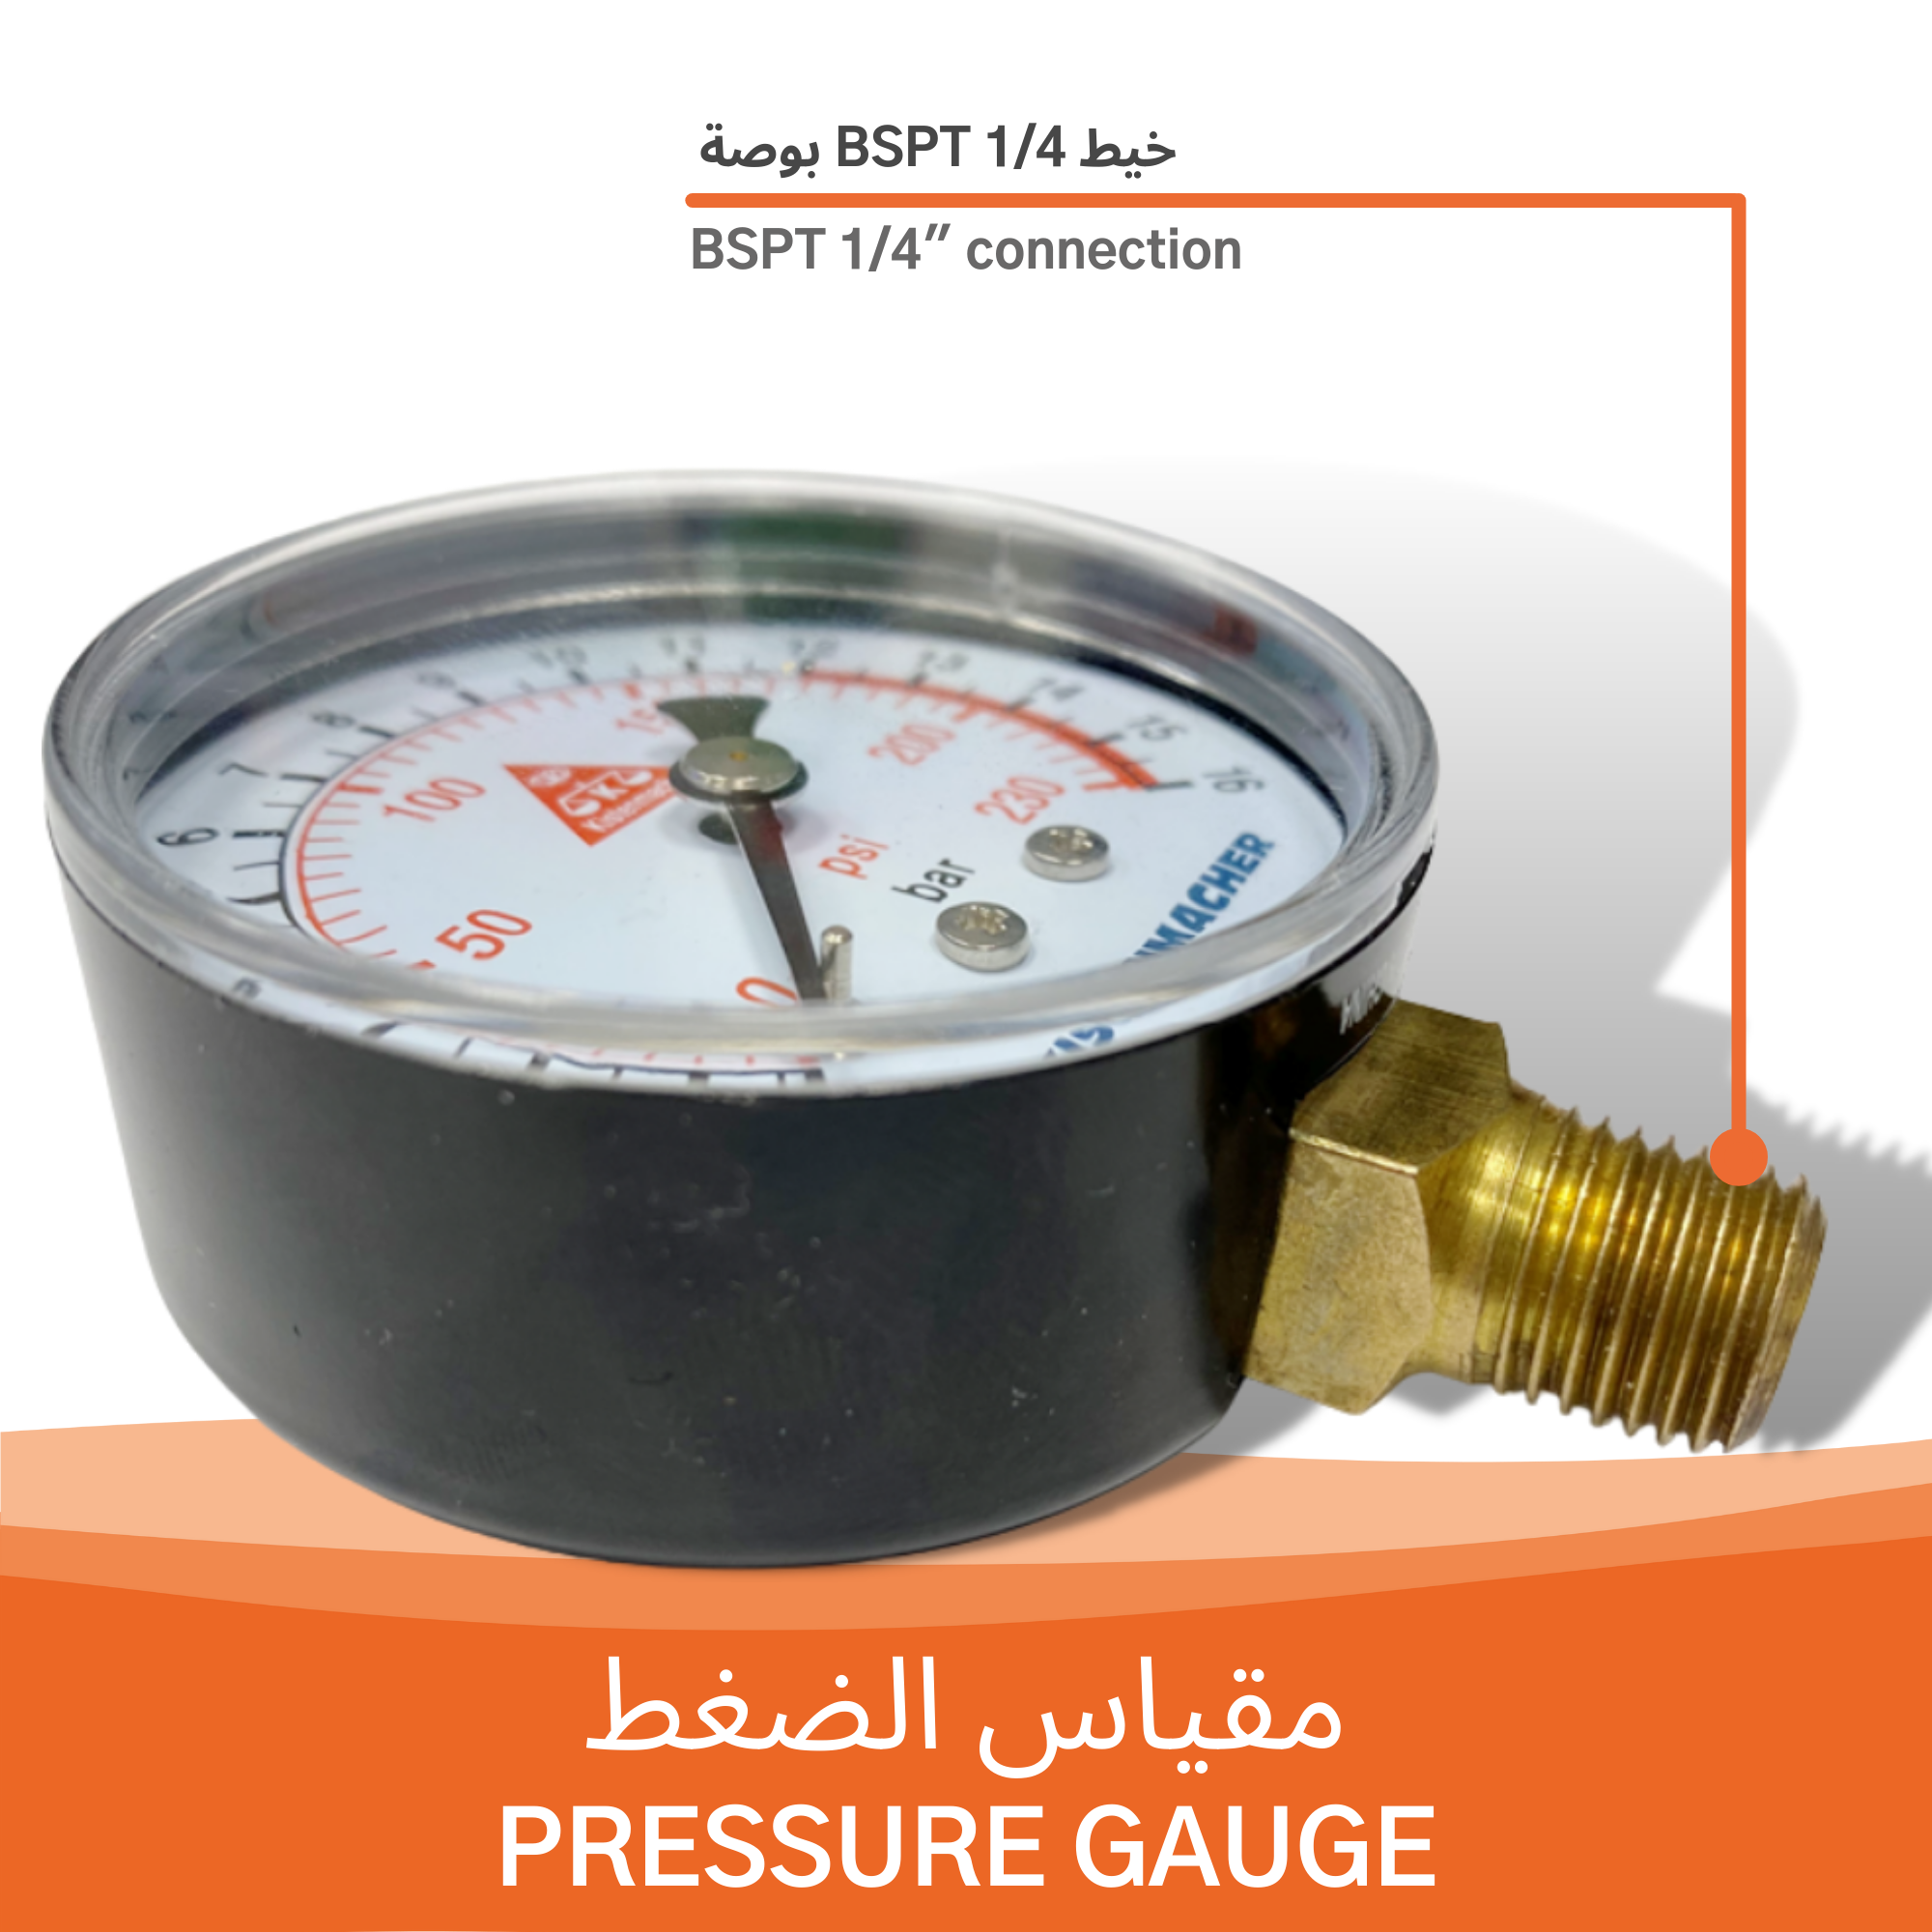 KISTENMACHER Pressure Gauge 0-10 bar (0-145 psi), 63mm housing